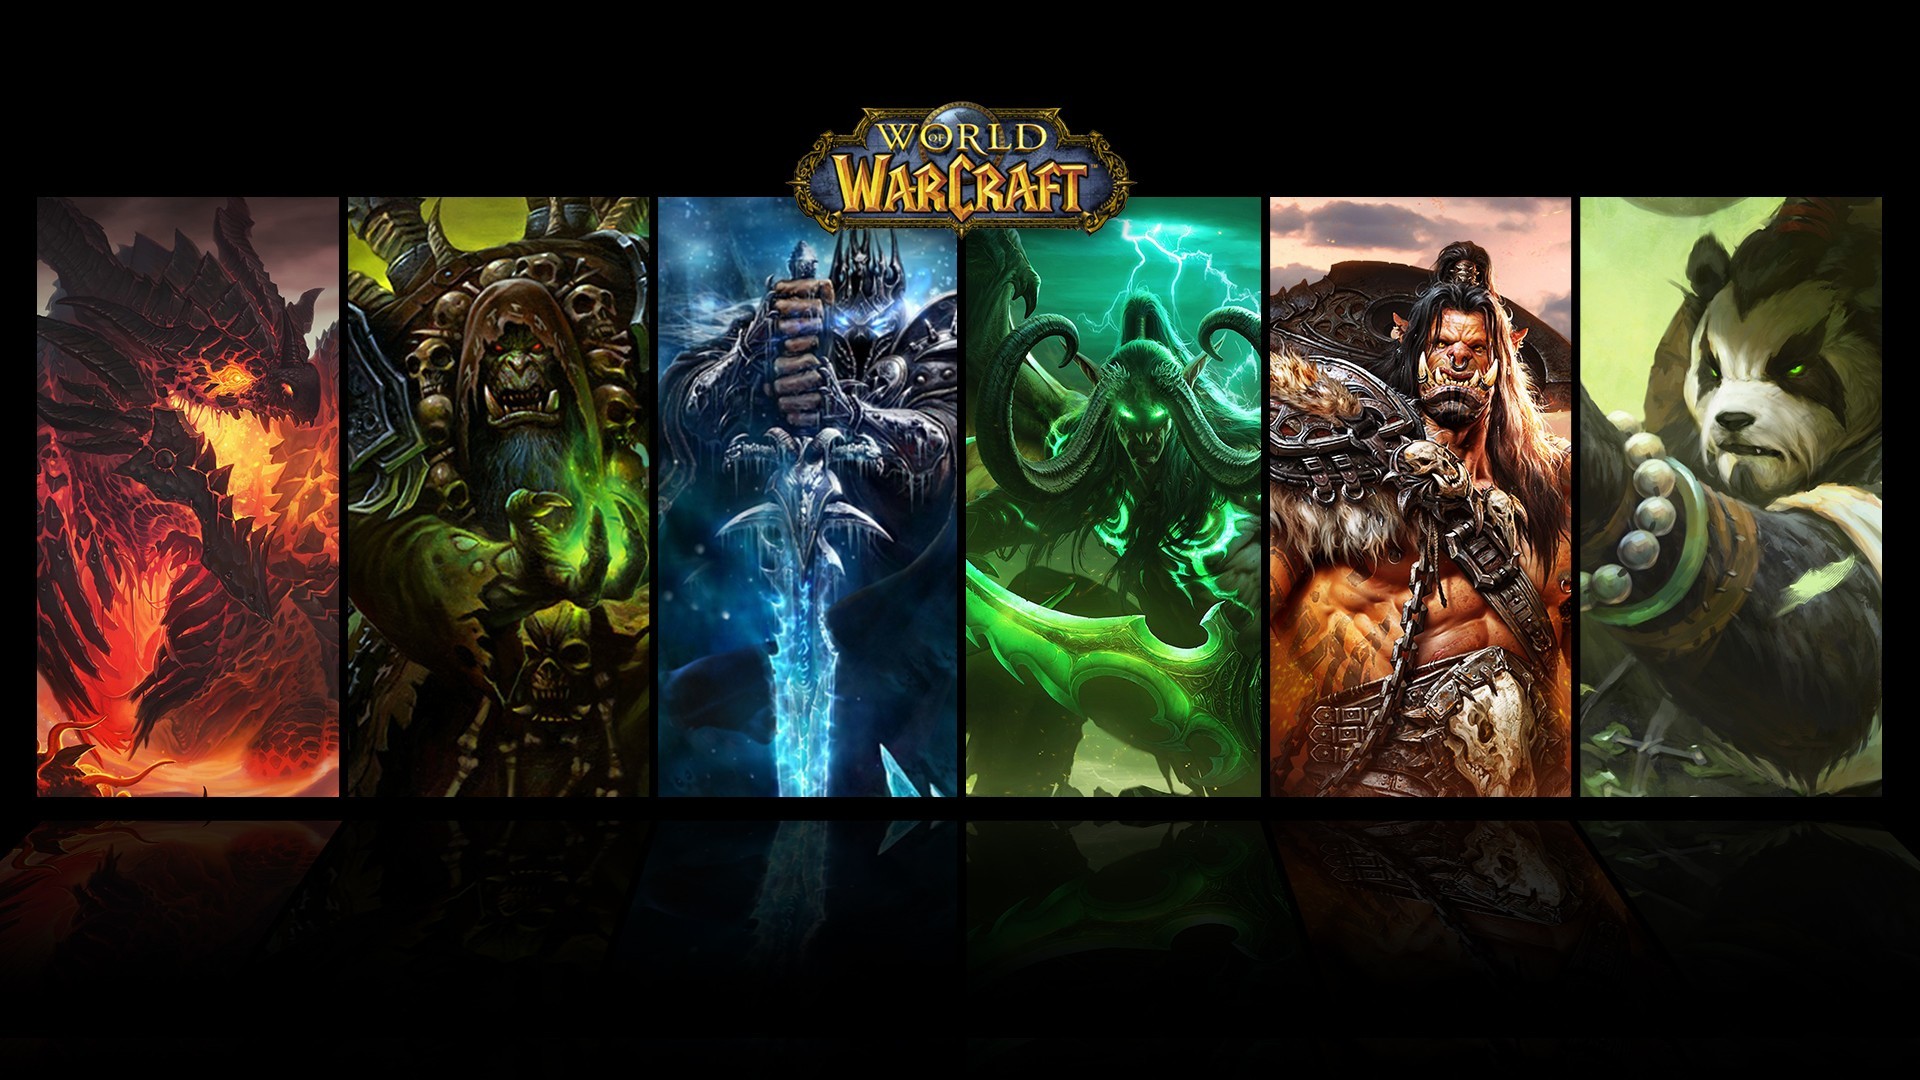 1920x1080 General  World of Warcraft Deathwing Arthas Gul'dan Illidan  Stormrage grommash hellscream Warcraft collage